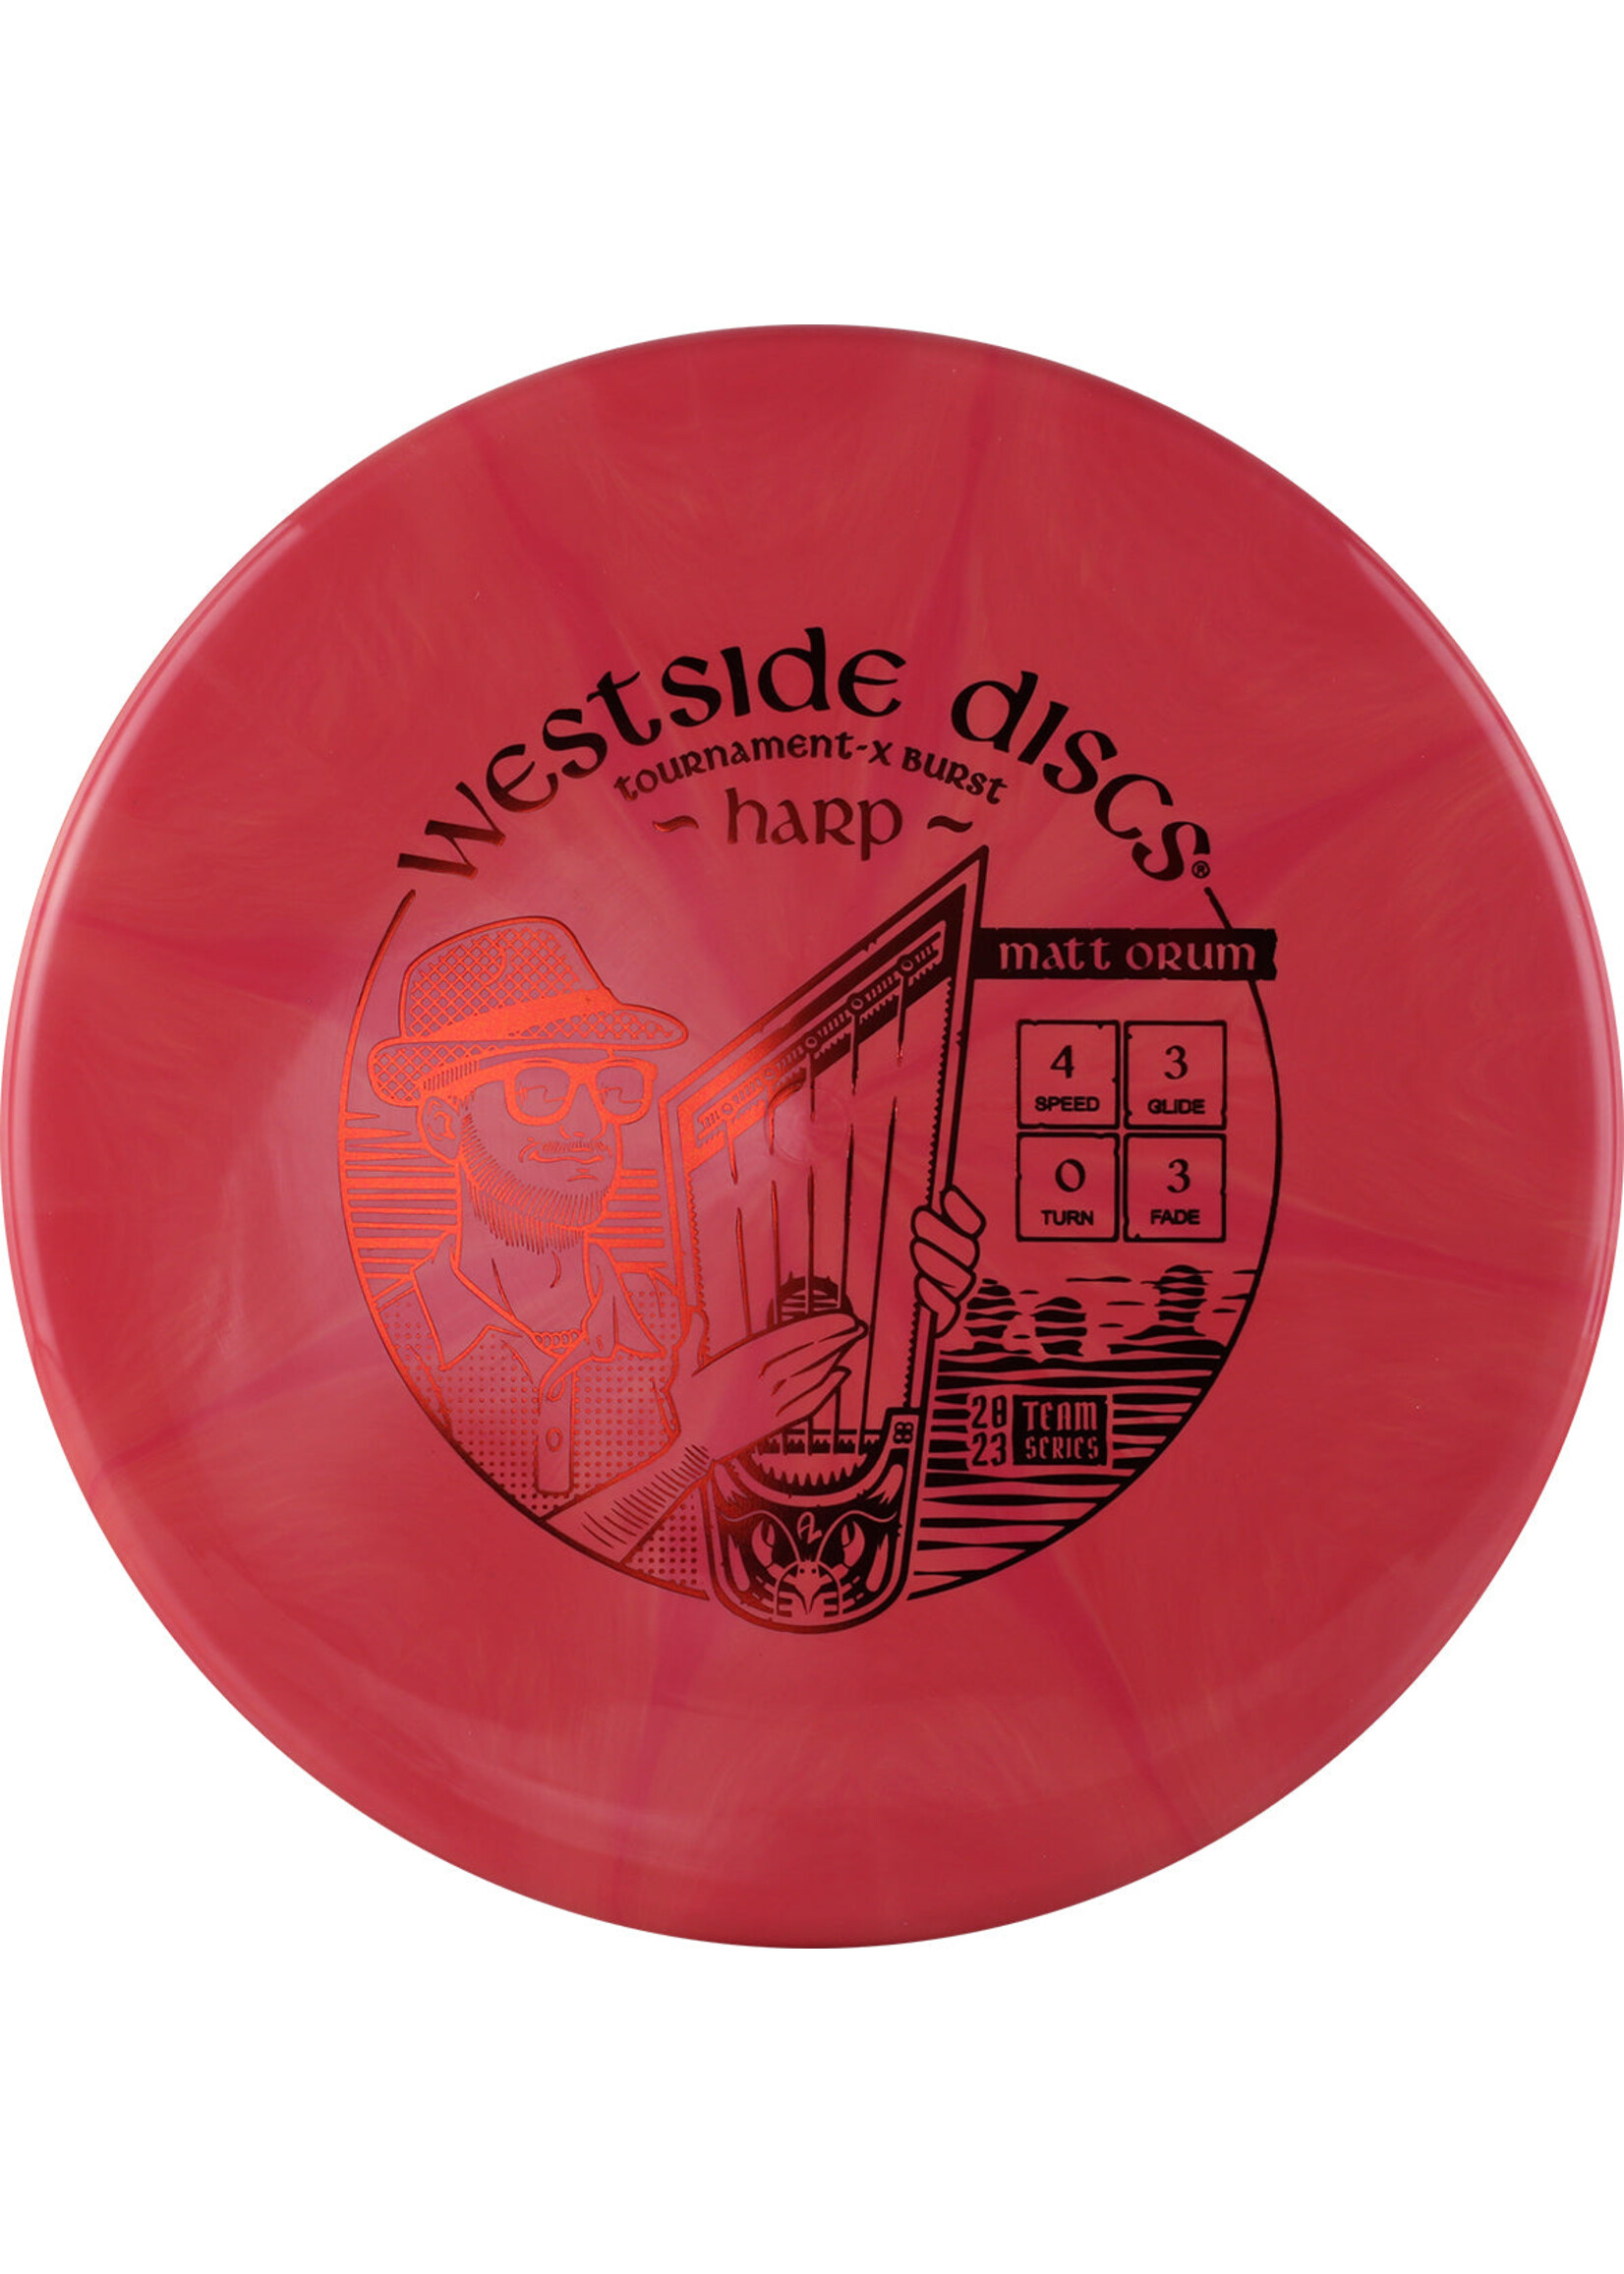 Westside Discs Westside Matt O Harp